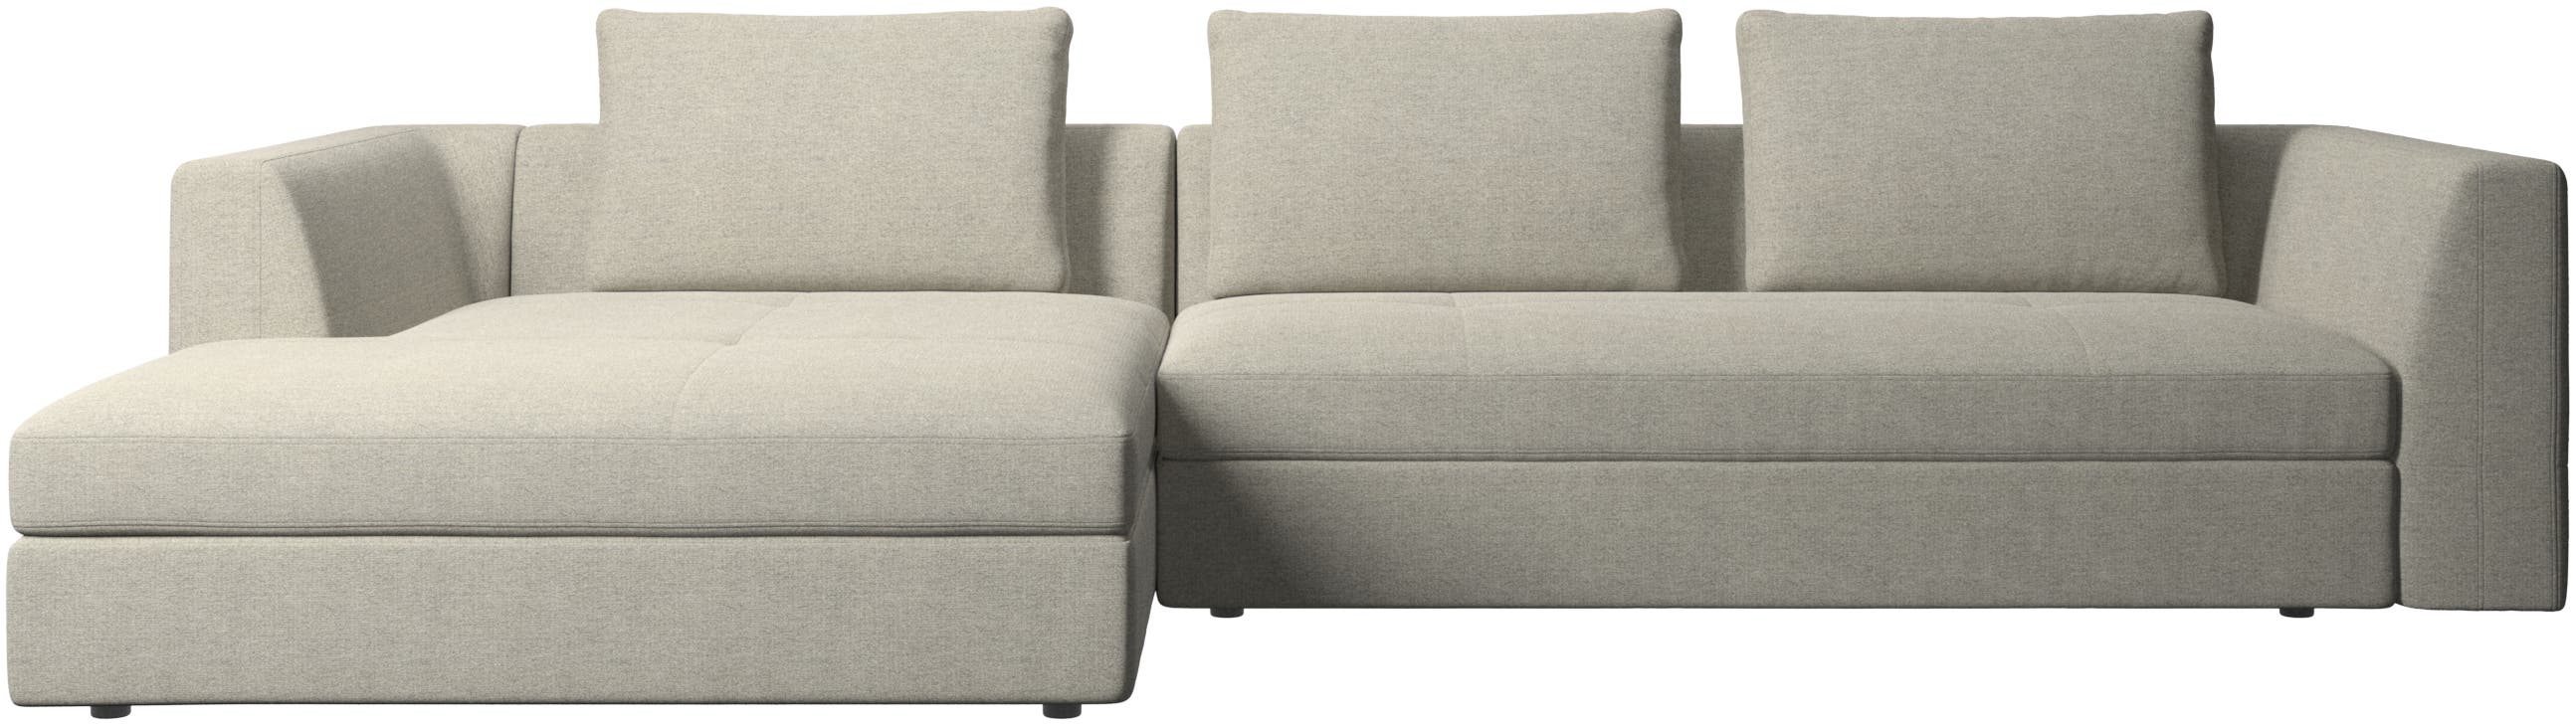 Bergamo sofa med hvilemodul